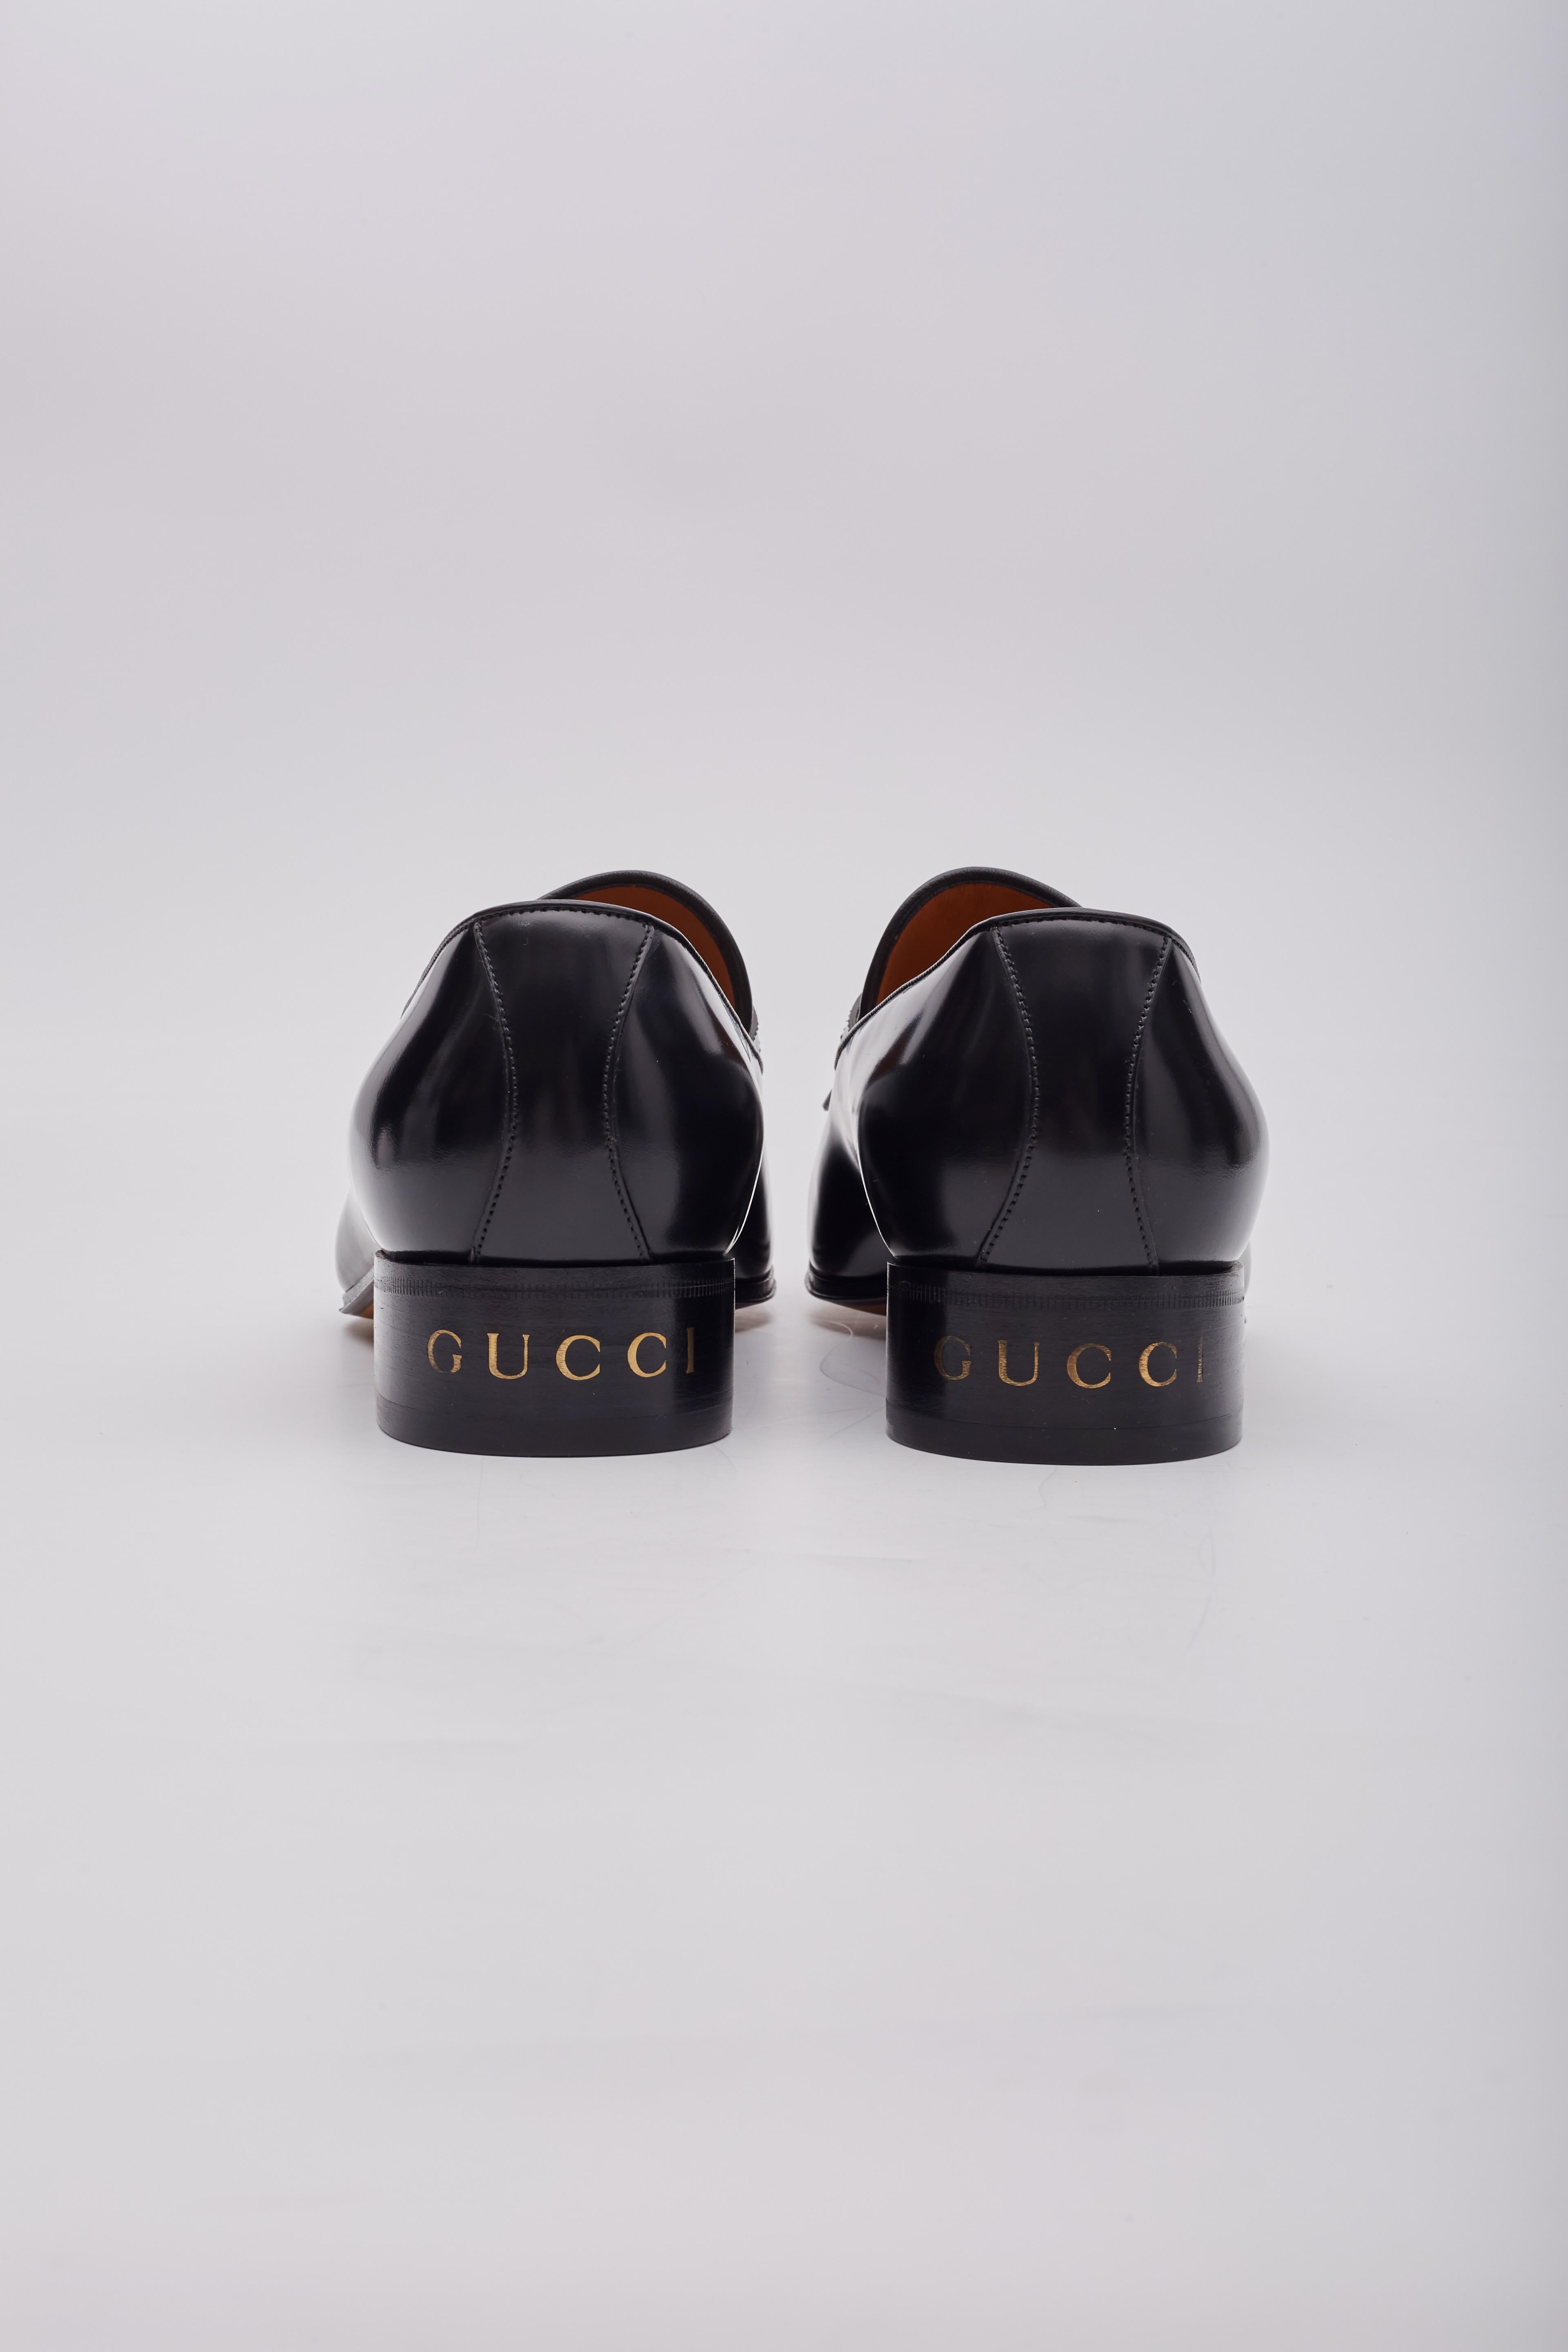 Men's Gucci Leather Black Tassel Loafers Mens (US 9) For Sale